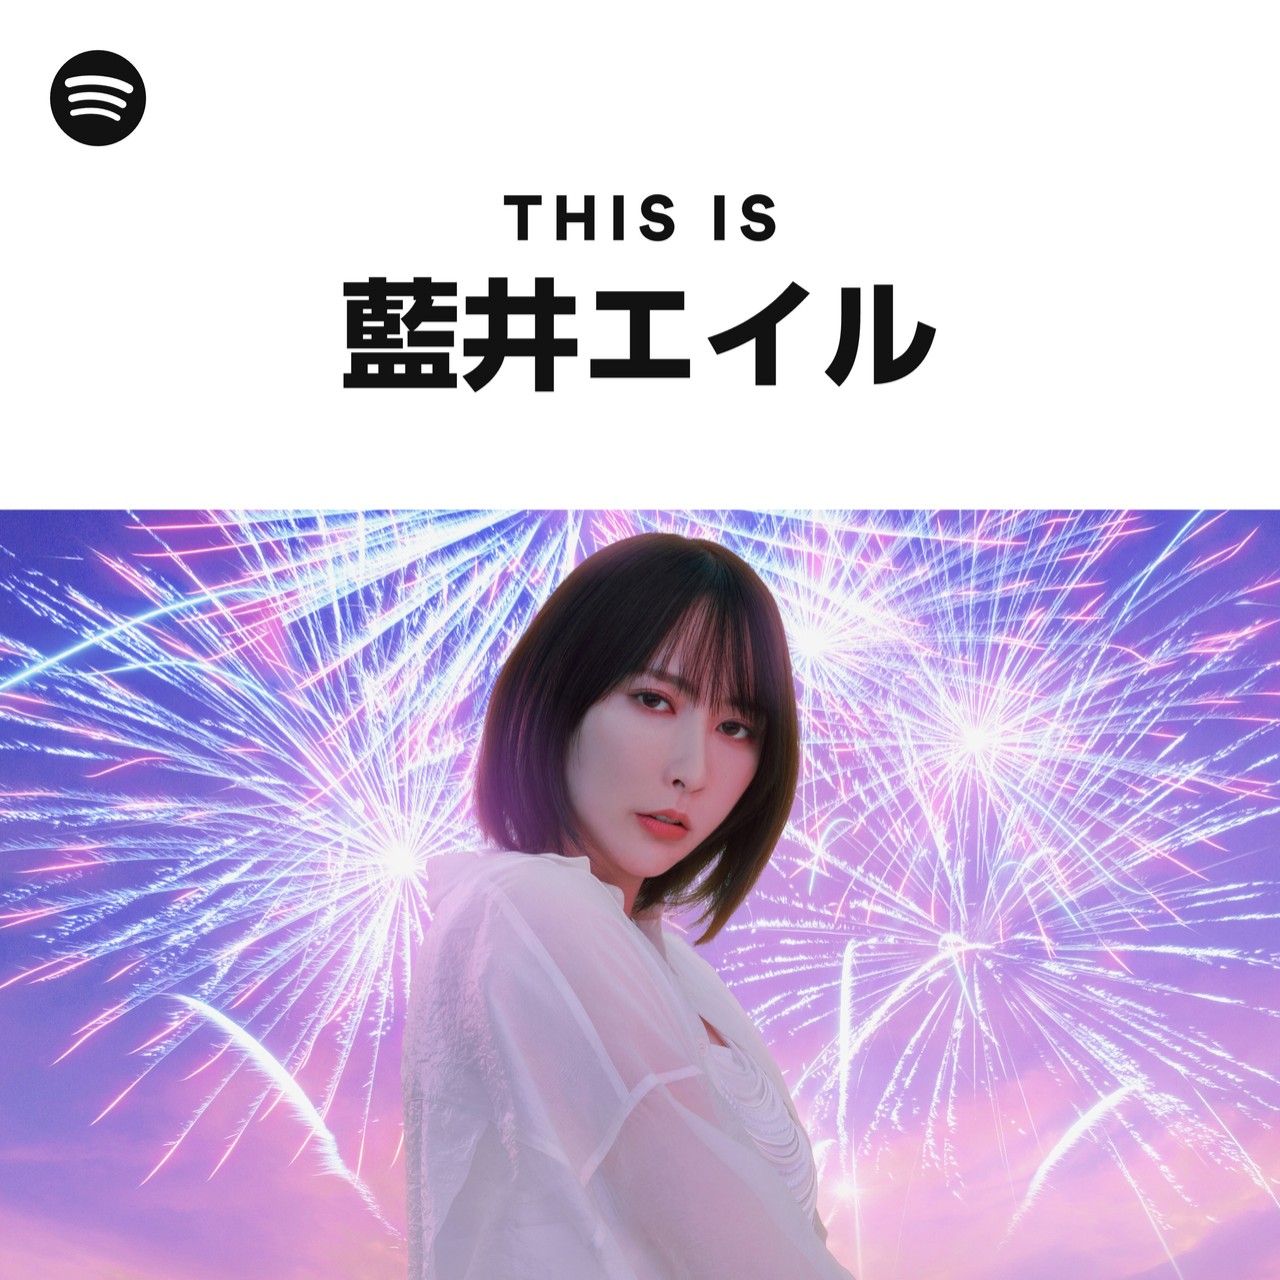 This Is Eir Aoi Spotify Playlist